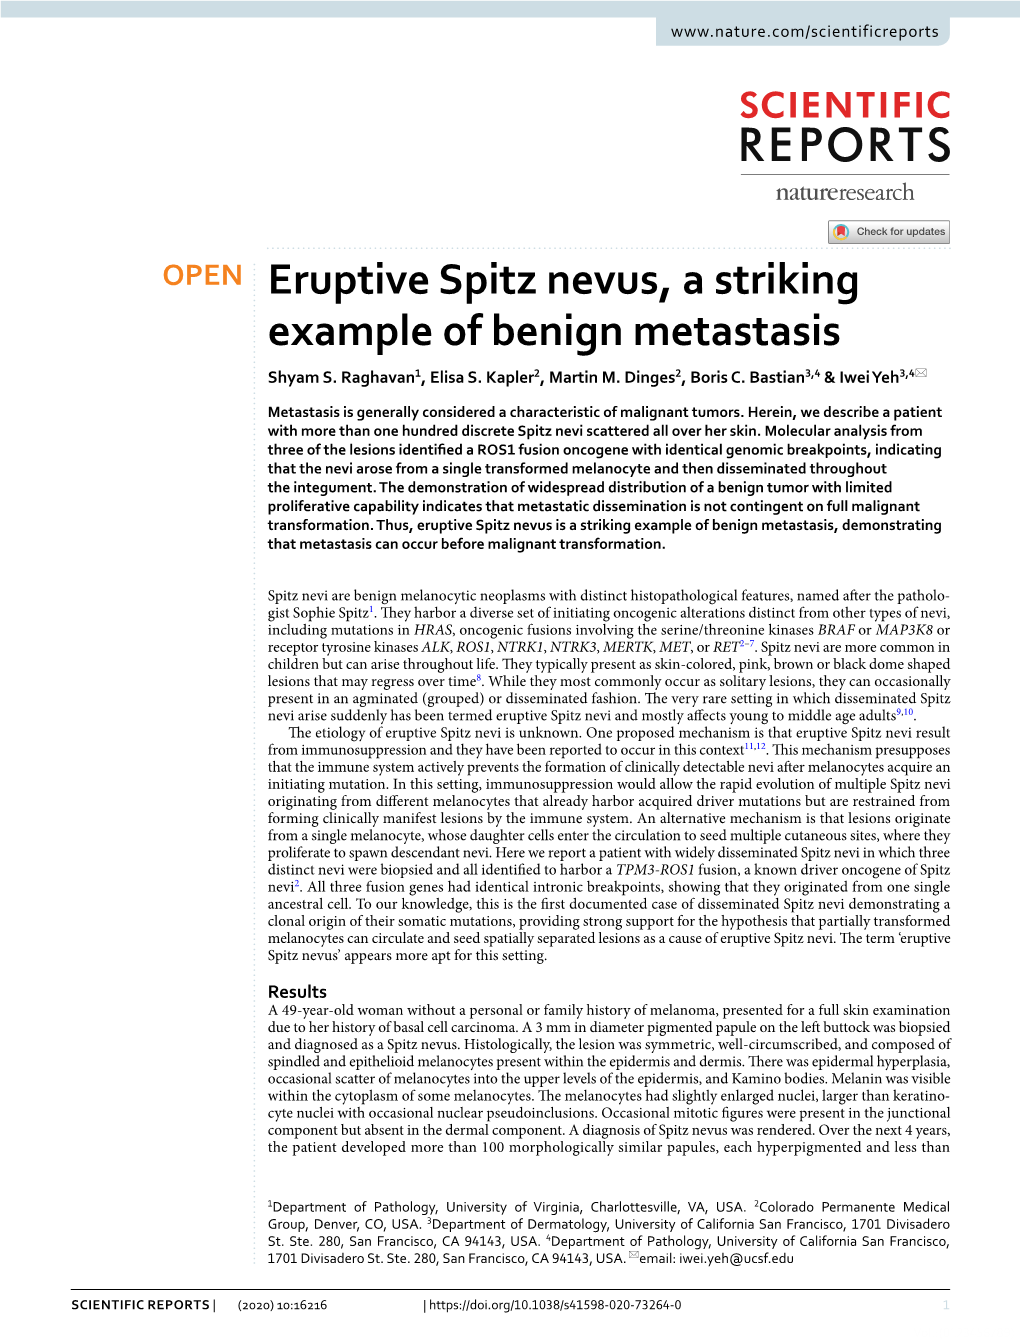 Eruptive Spitz Nevus, a Striking Example of Benign Metastasis Shyam S